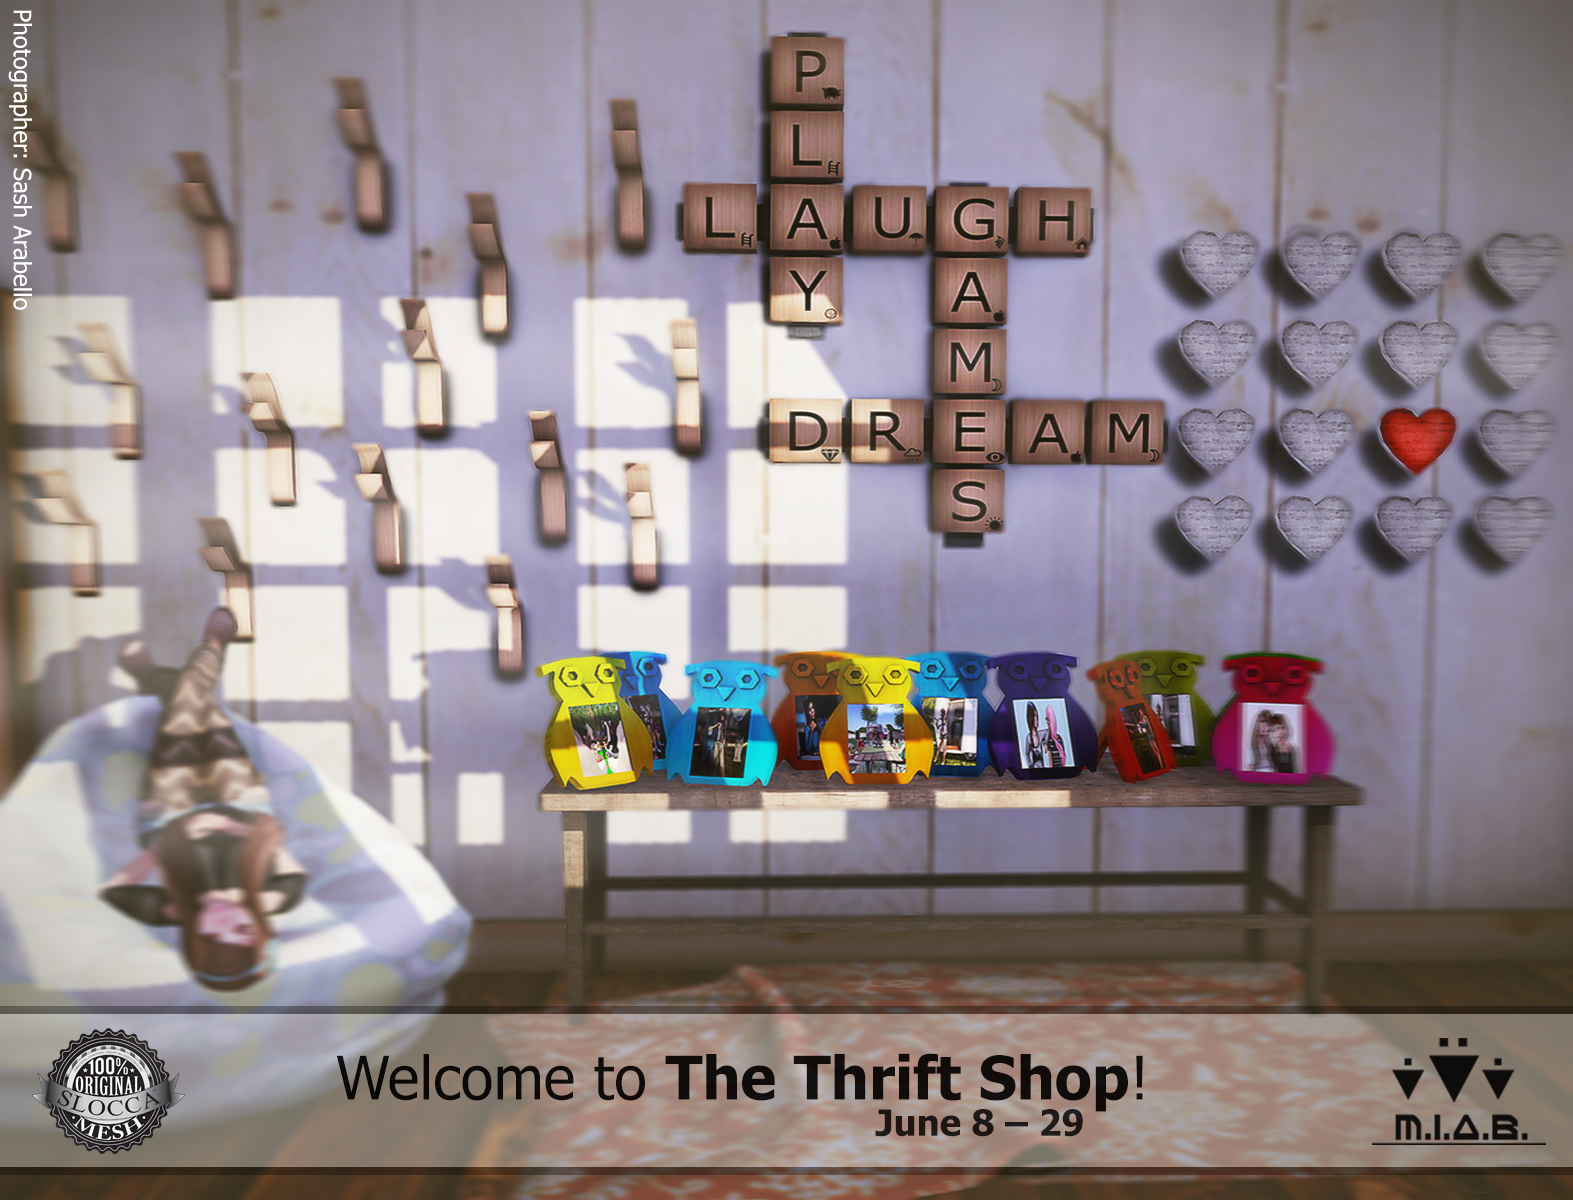 MIAB - The Thrift Shop